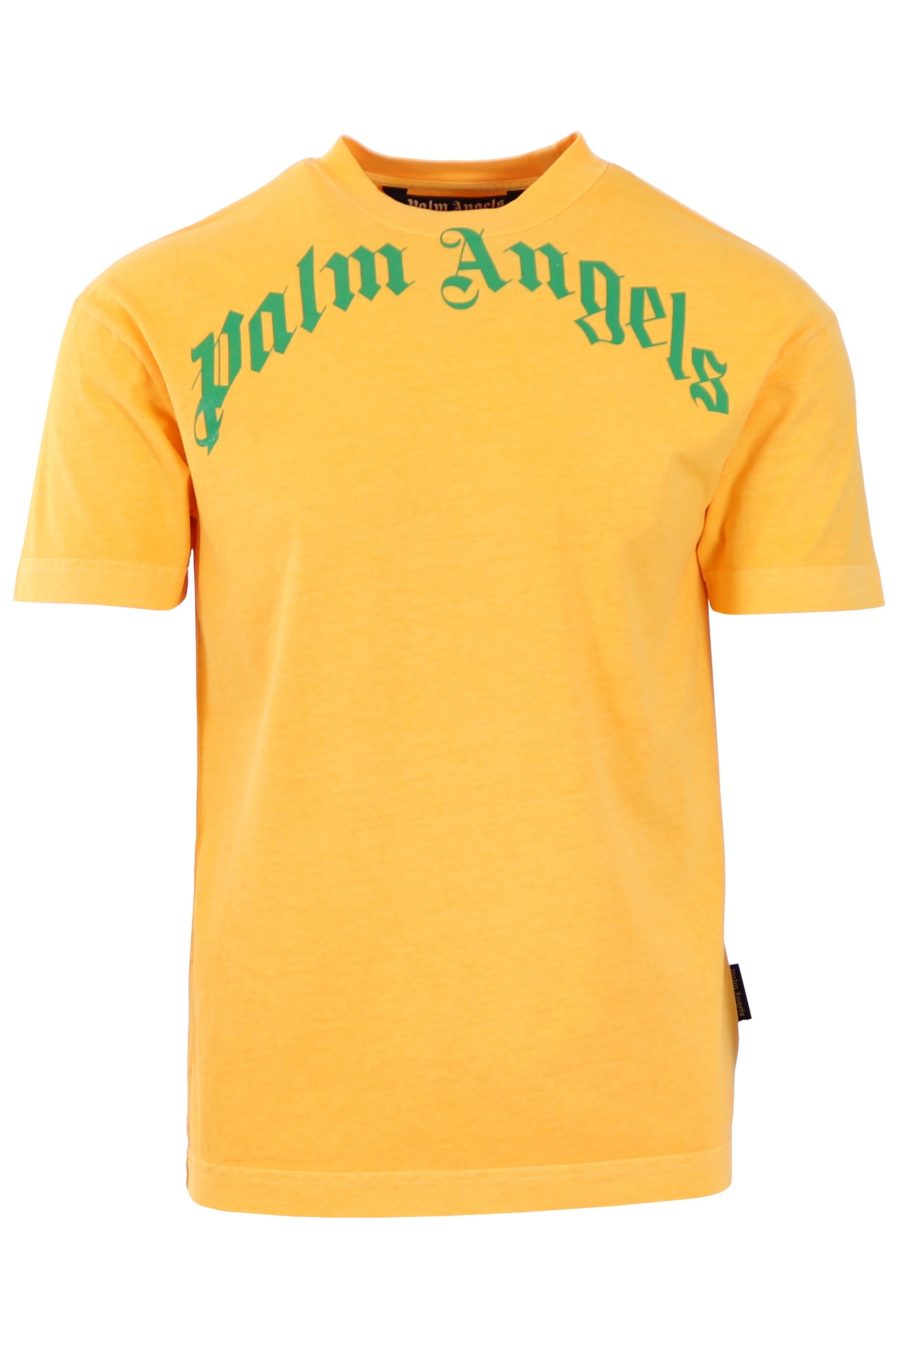 Camiseta Palm Angels amarilla logo verde - 594db2545daa60134919d7939234c2fd7658c51d